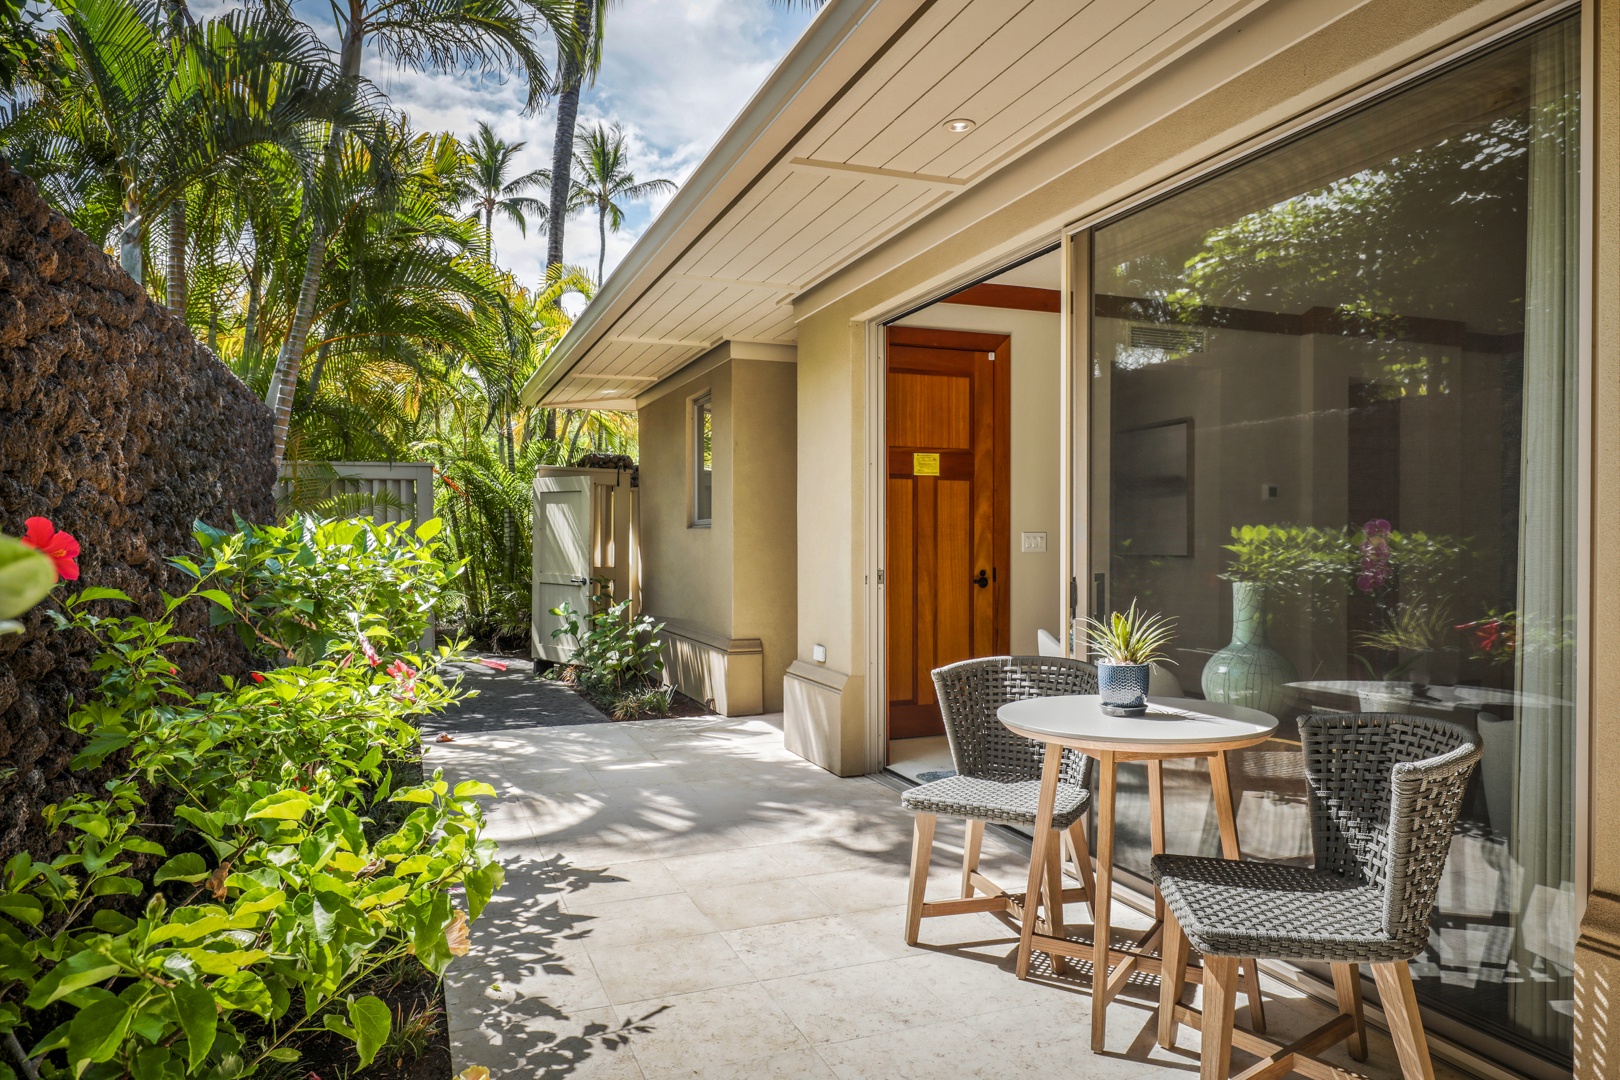 Kailua Kona Vacation Rentals, 4BD Hainoa Estate (122) at Four Seasons Resort at Hualalai - Outdoor seating area off Guest Room 4’s entrance.